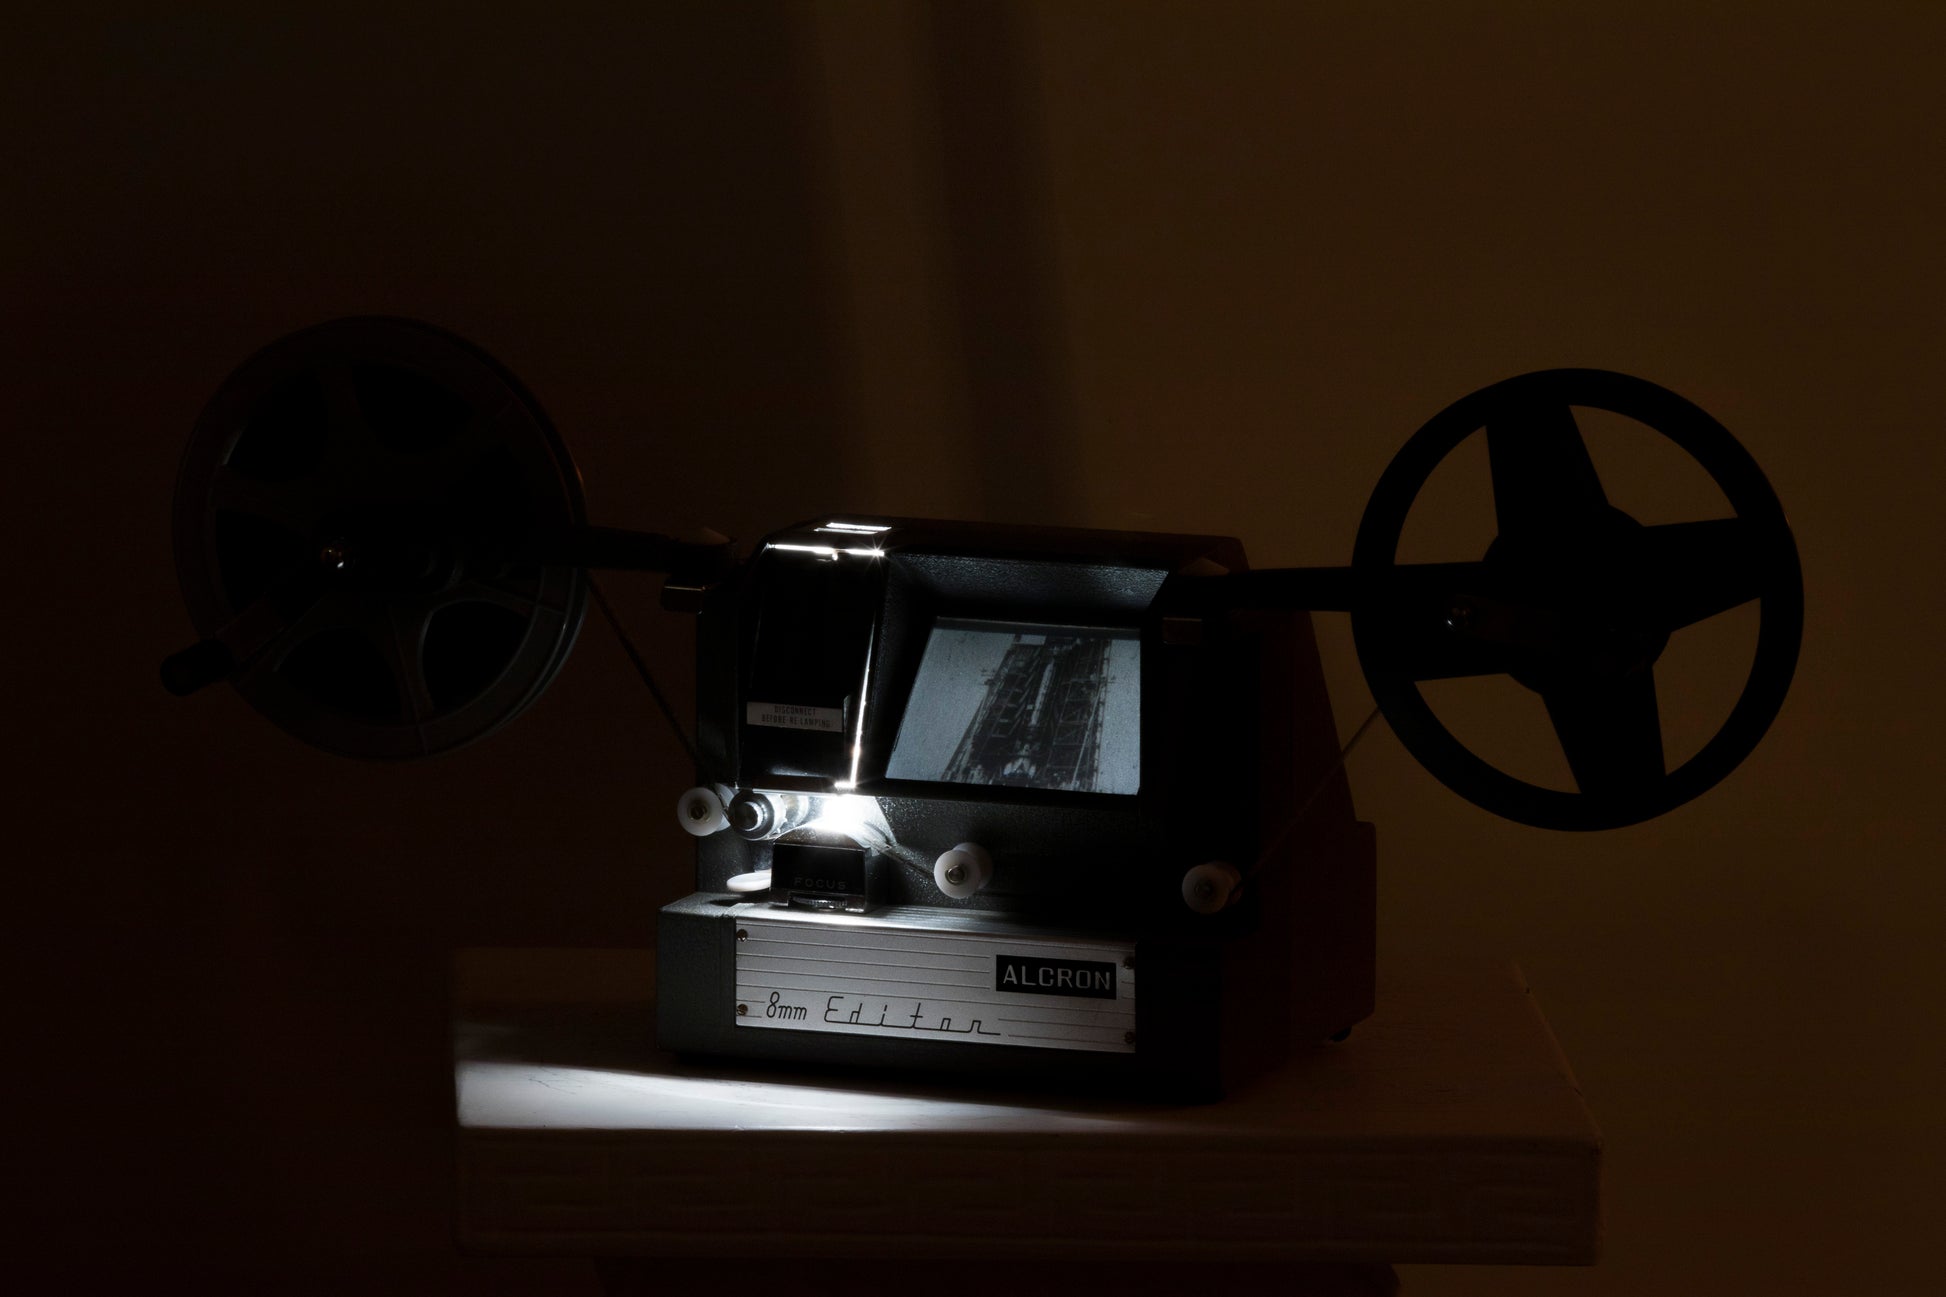 Alcron 8mm Editor Regular 8mm movie viewer/editor shown illuminated